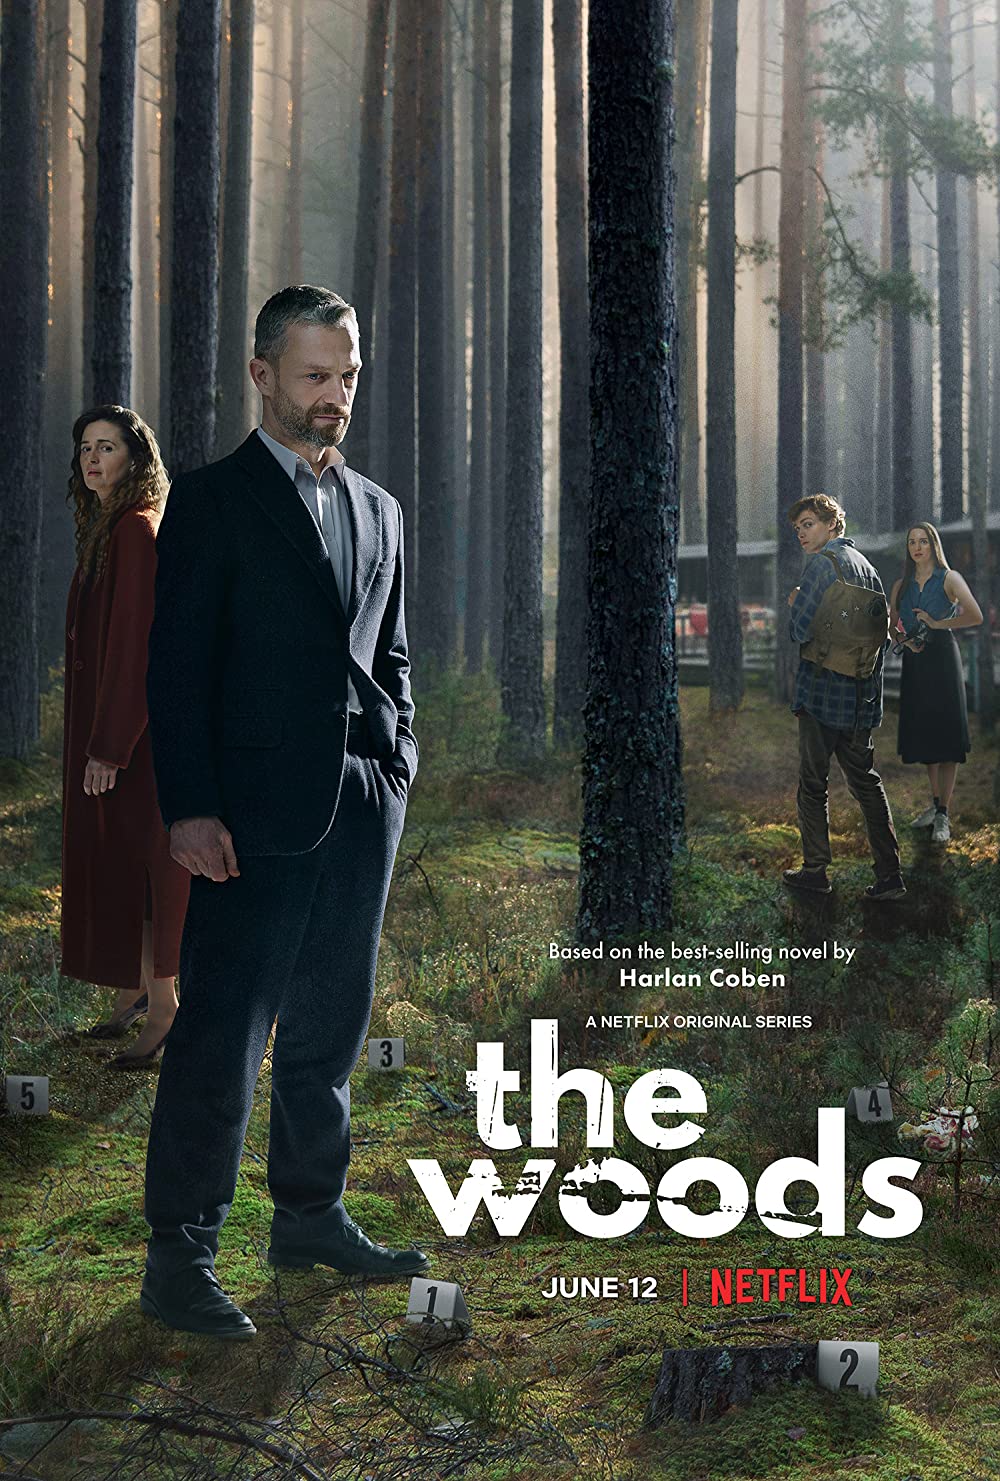 Filmbeschreibung zu The Woods